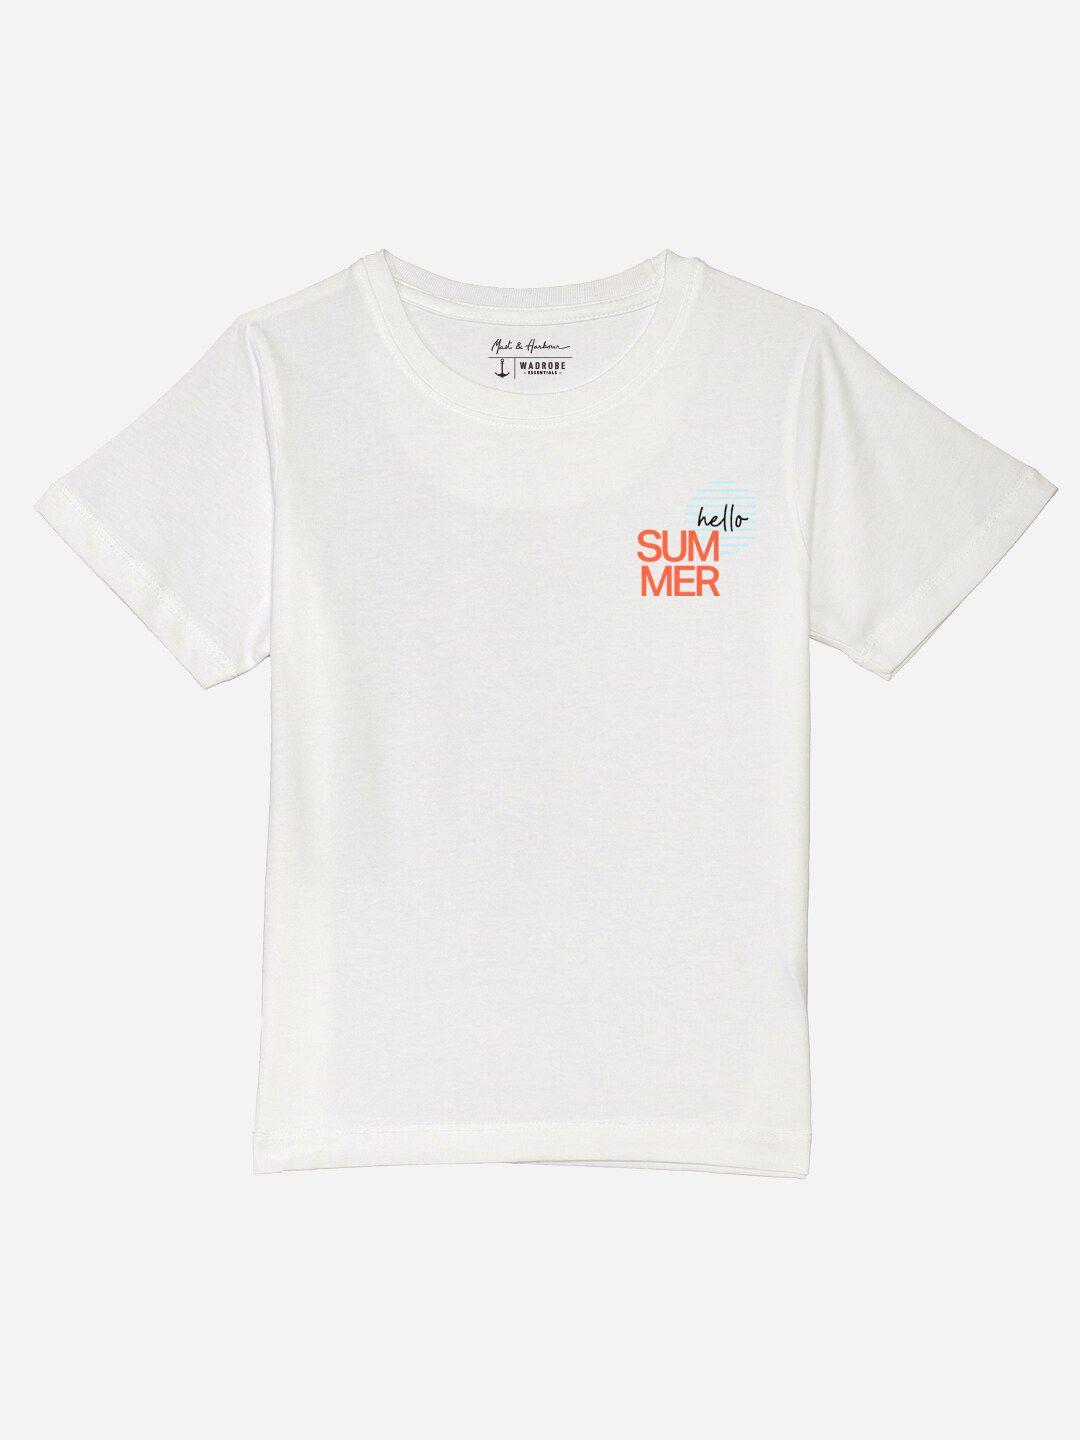 m&h juniors boys white typography printed pure cotton t-shirt